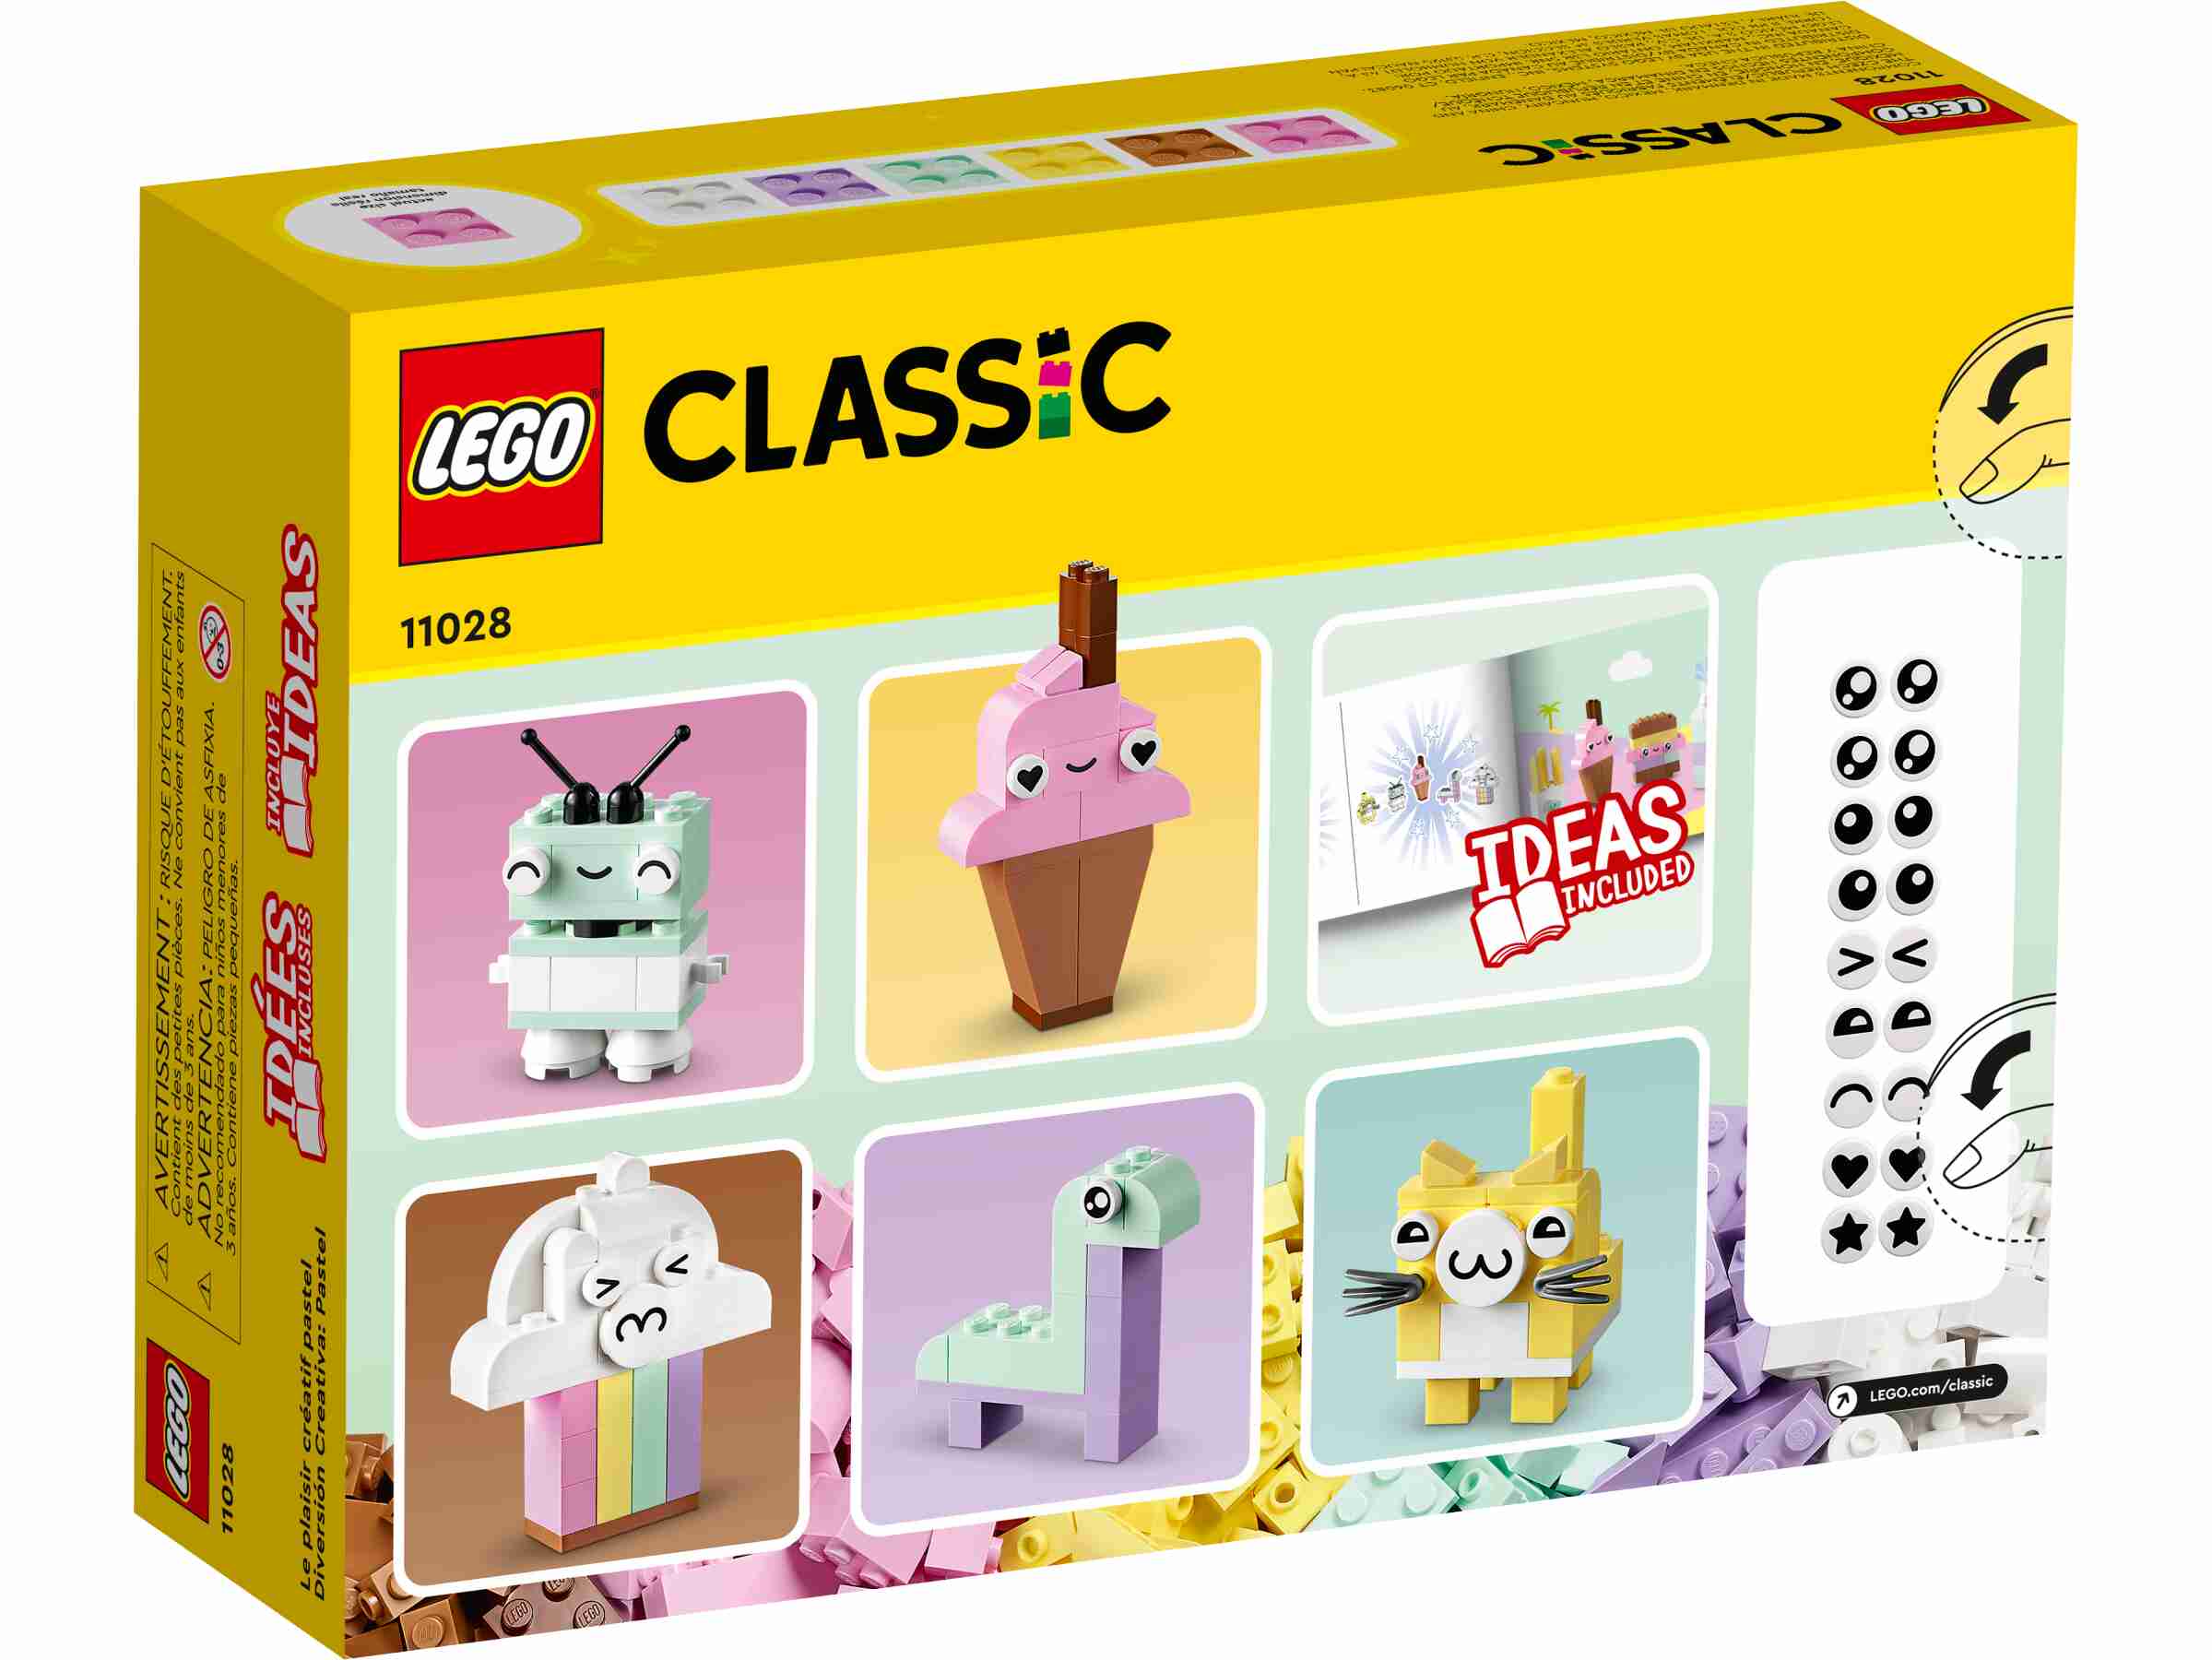 LEGO 11028 Classic Pastell Kreativ-Bauset, Bauanleitungen für 5 Modelle